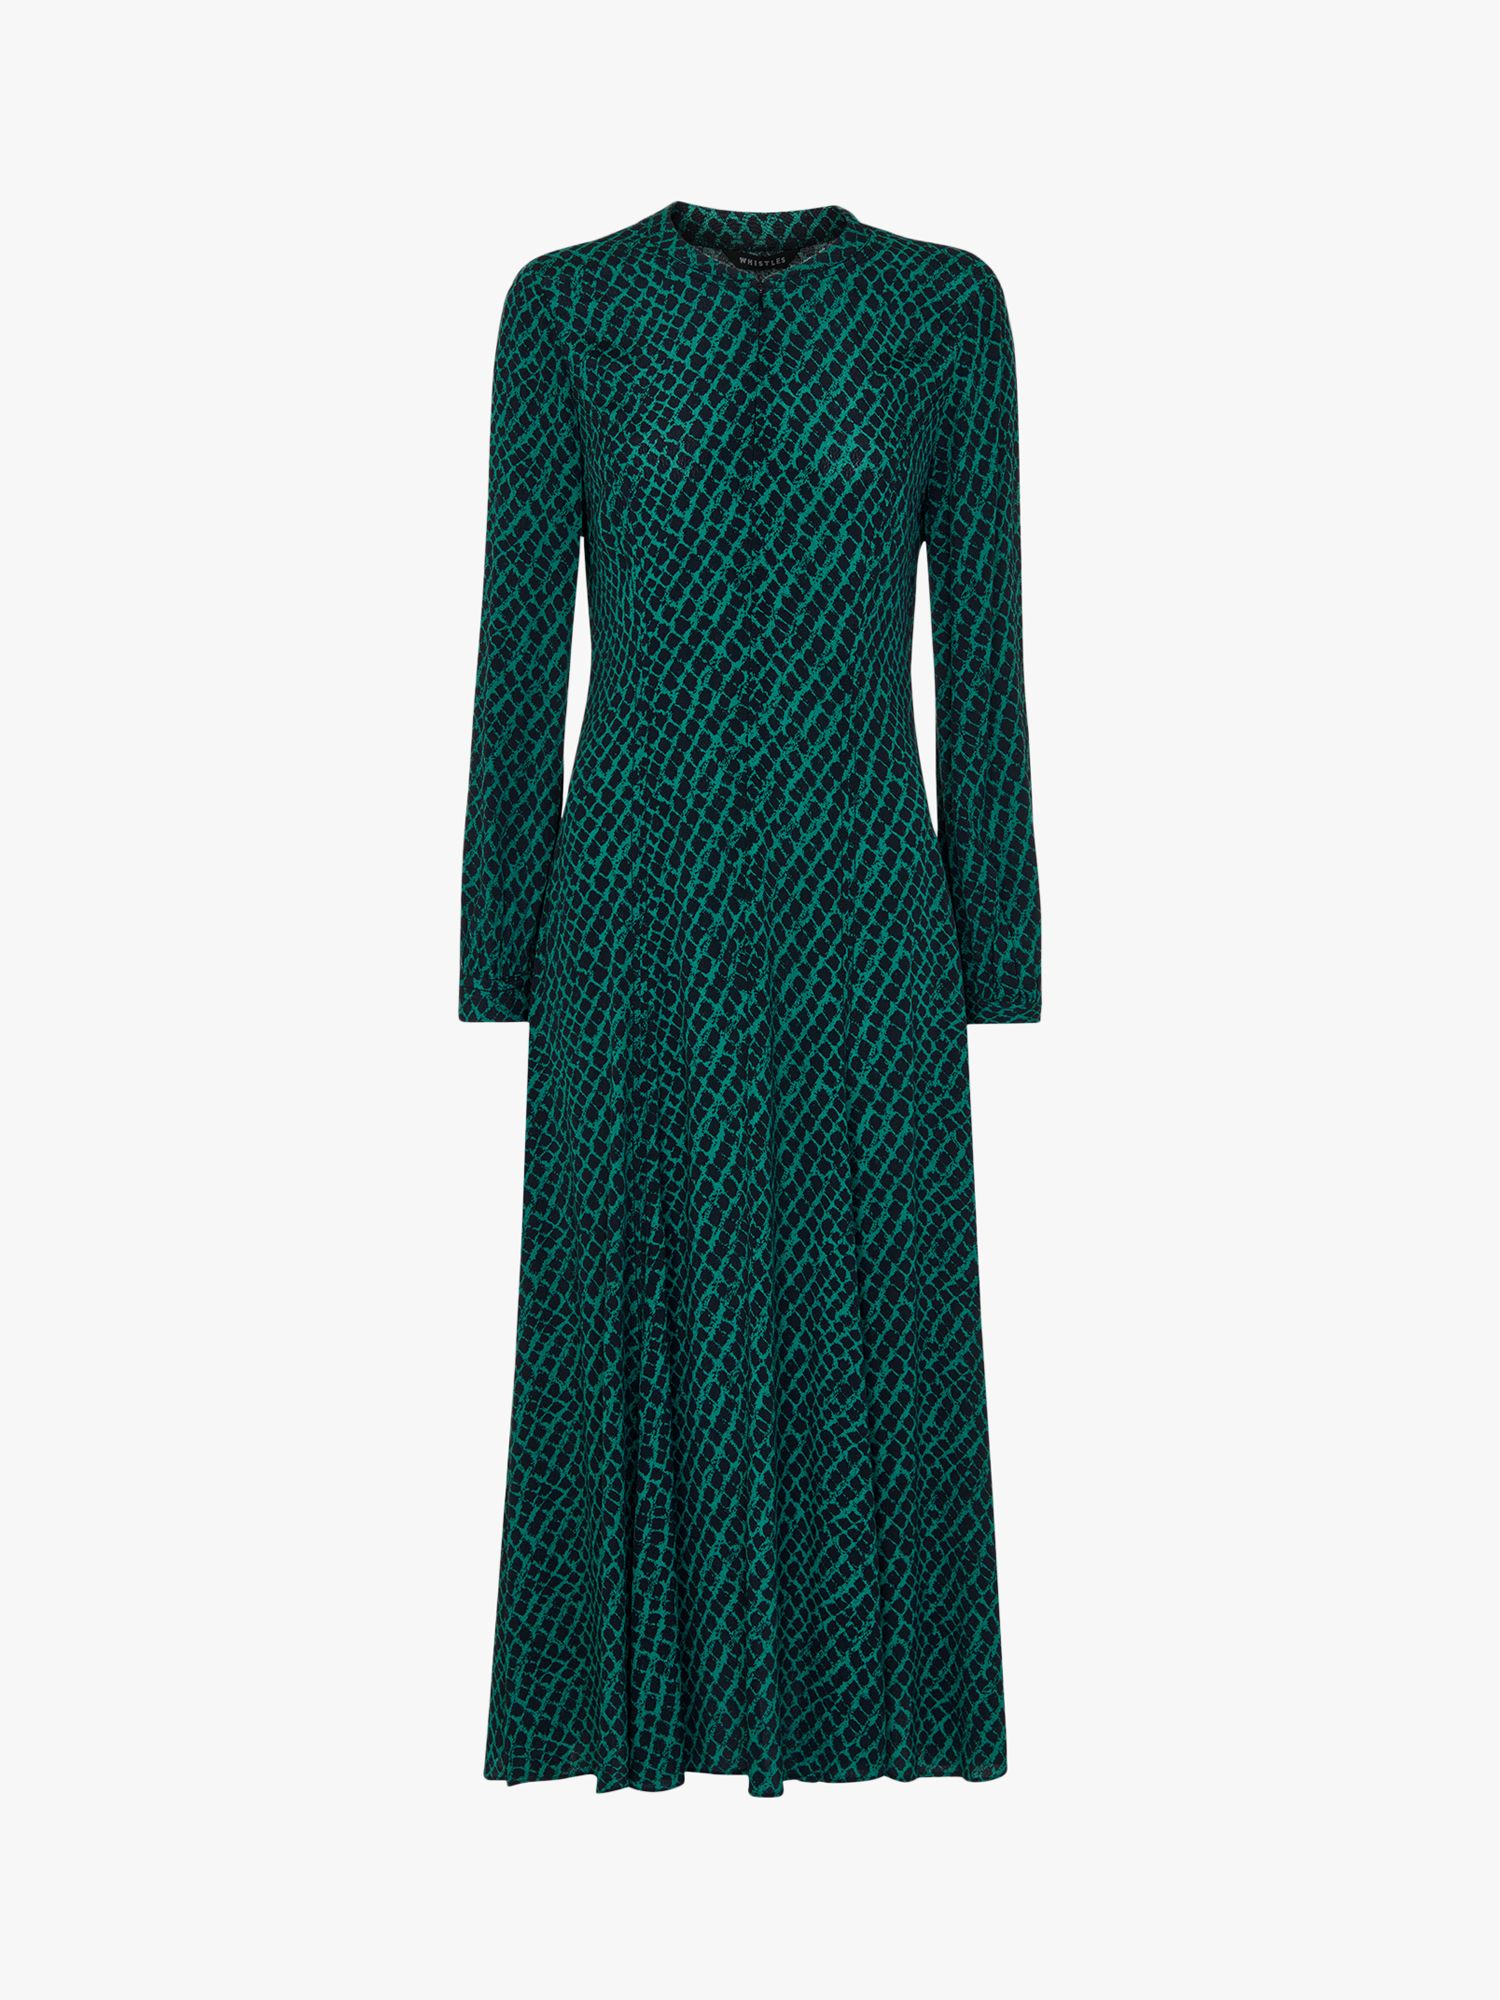 Whistles Brushed Geo Print Midi Dress, Green/Multi at John Lewis & Partners